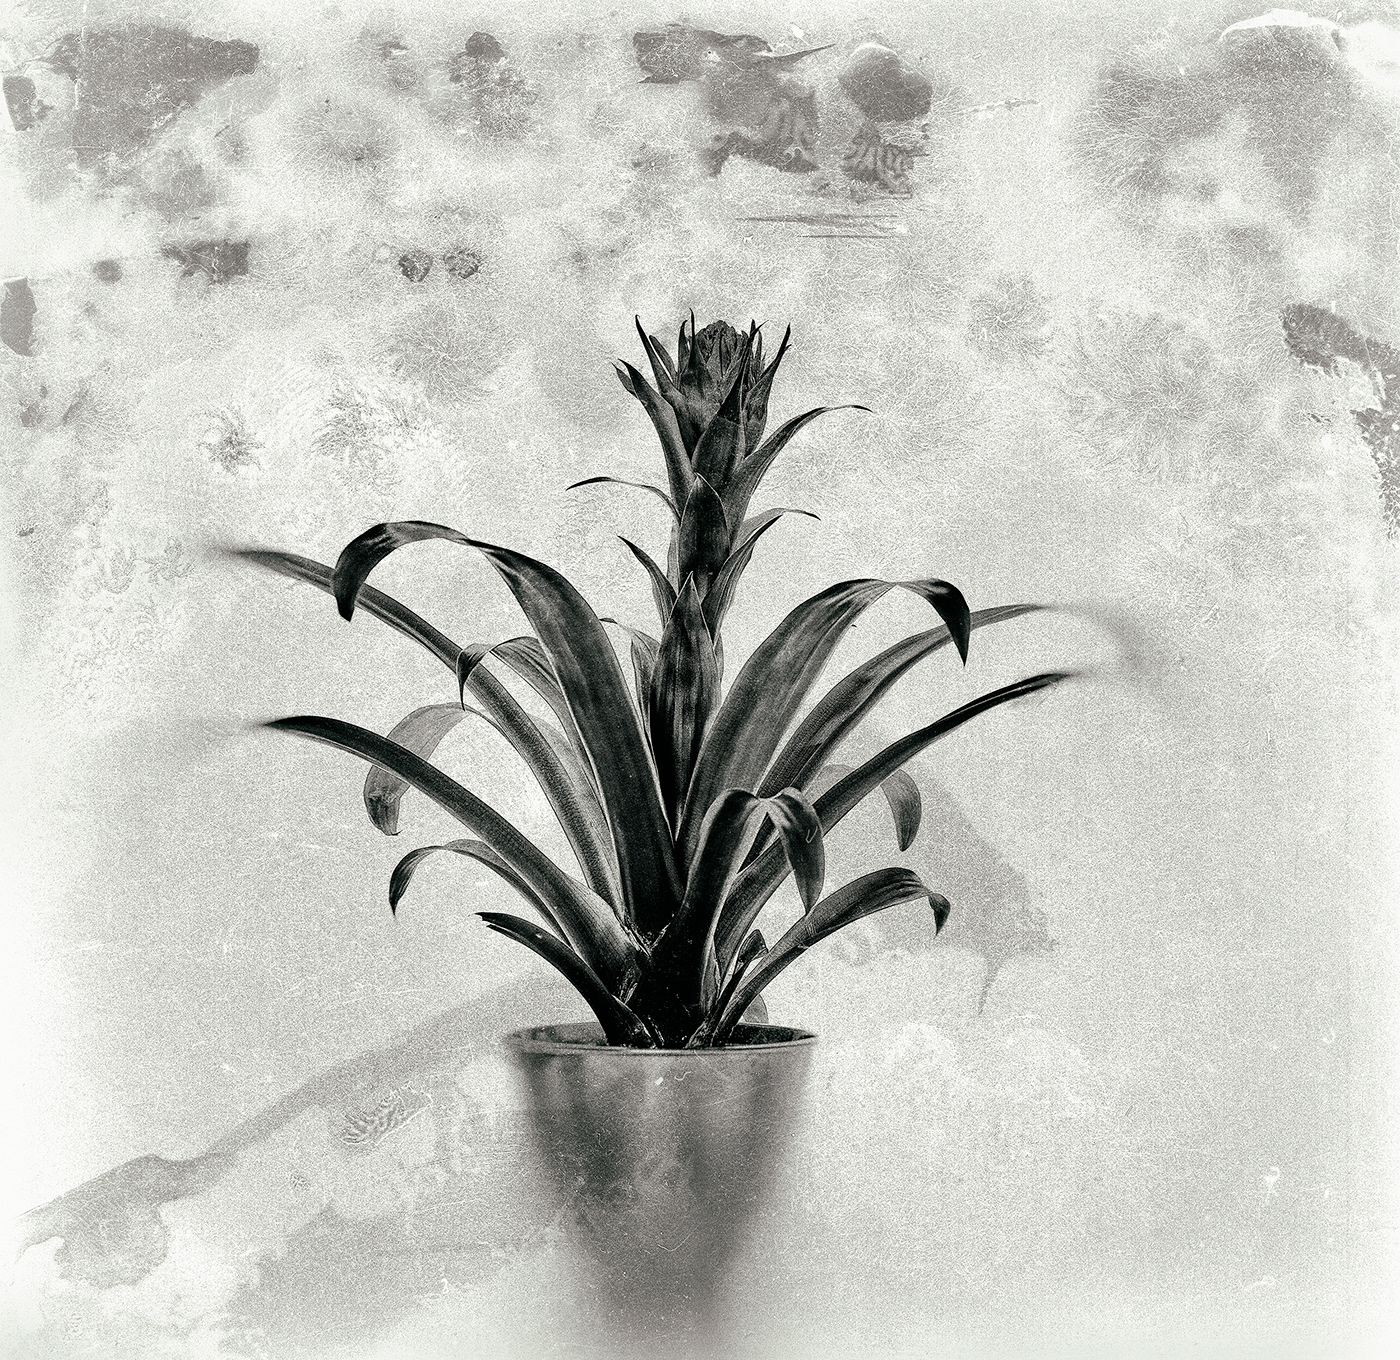 blumen finart Flowers mediumformat Photography 